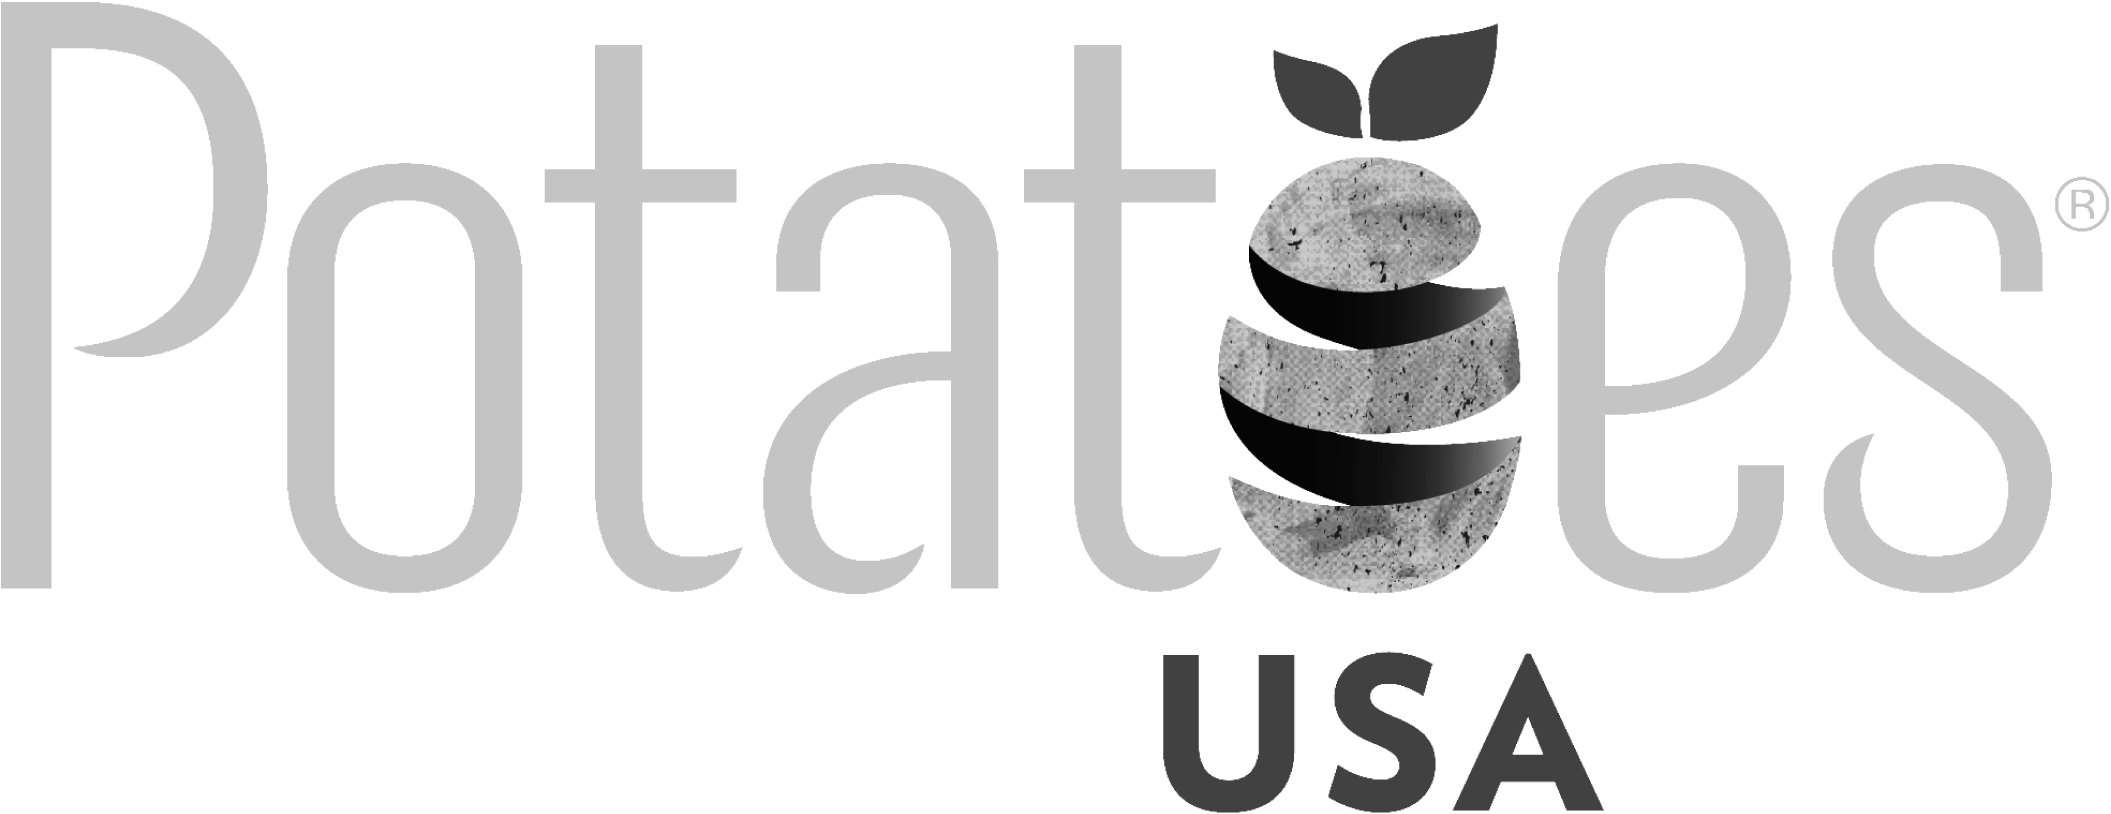 MY - Home Page - Sponsorship footer - sponsor logo - PotatoesUSA